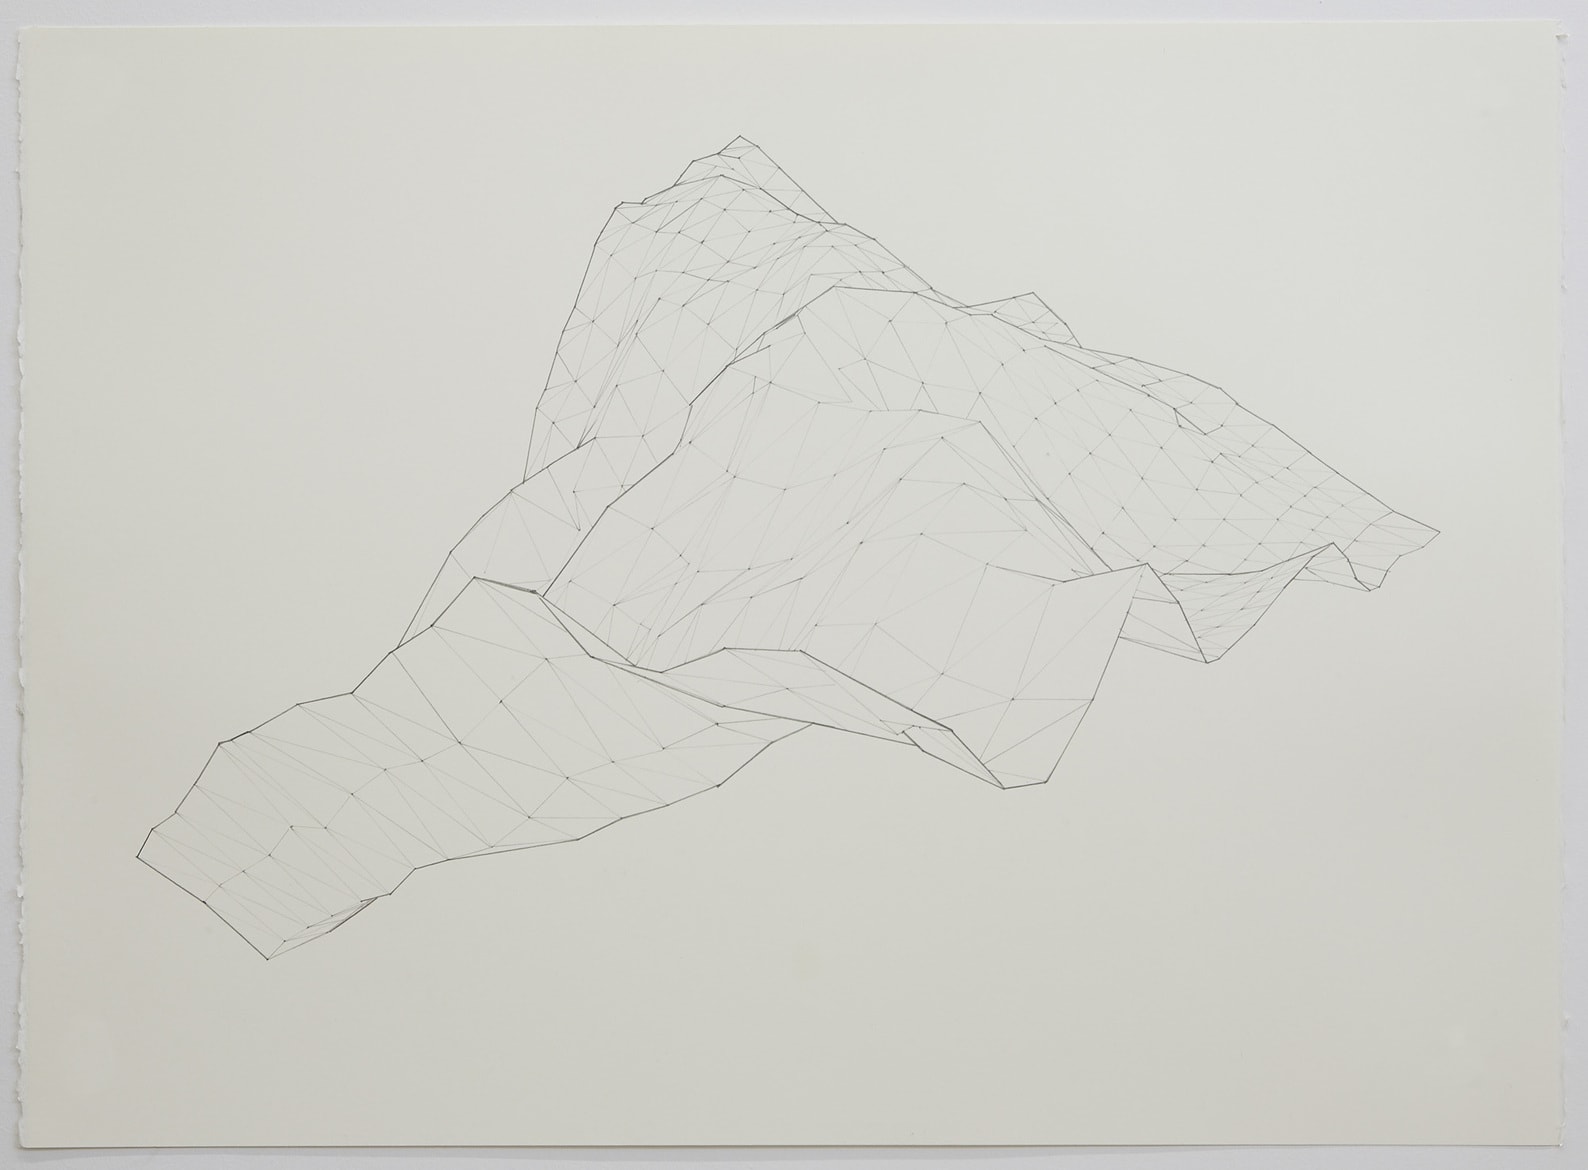 Mount Digital drawing', 2018, pencil on paper, 76 x 56 cm